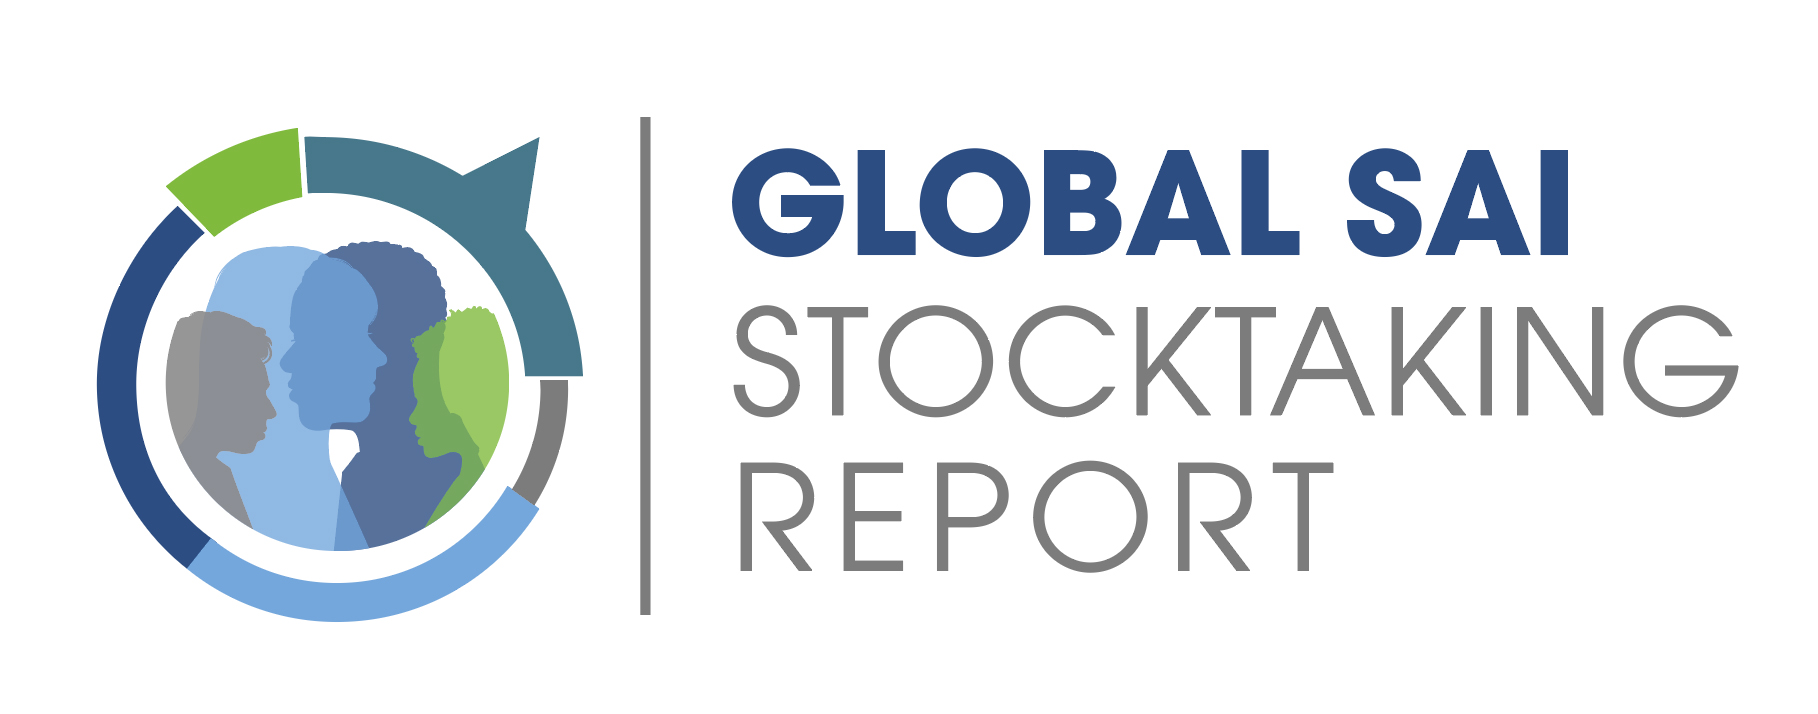 QP 3127 IDI GLOBAL SAI STOCKTAKING REPORT logo